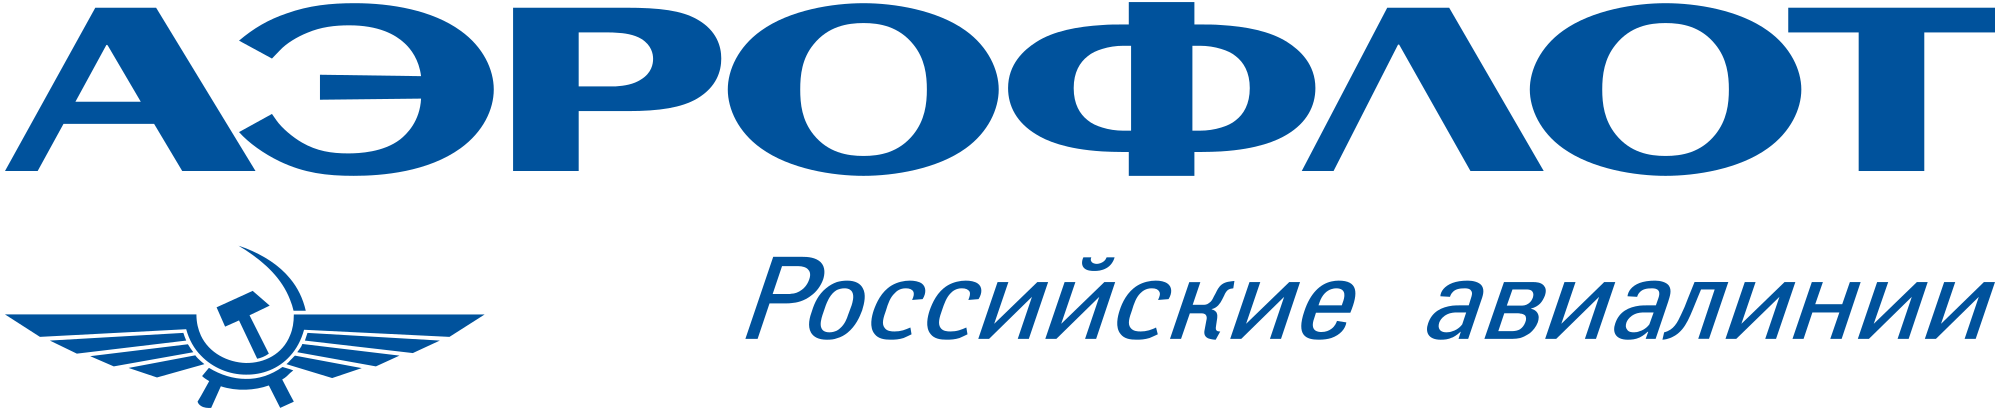 Russia Airline Logo - Aeroflot Russian Airlines logo (Russian).svg